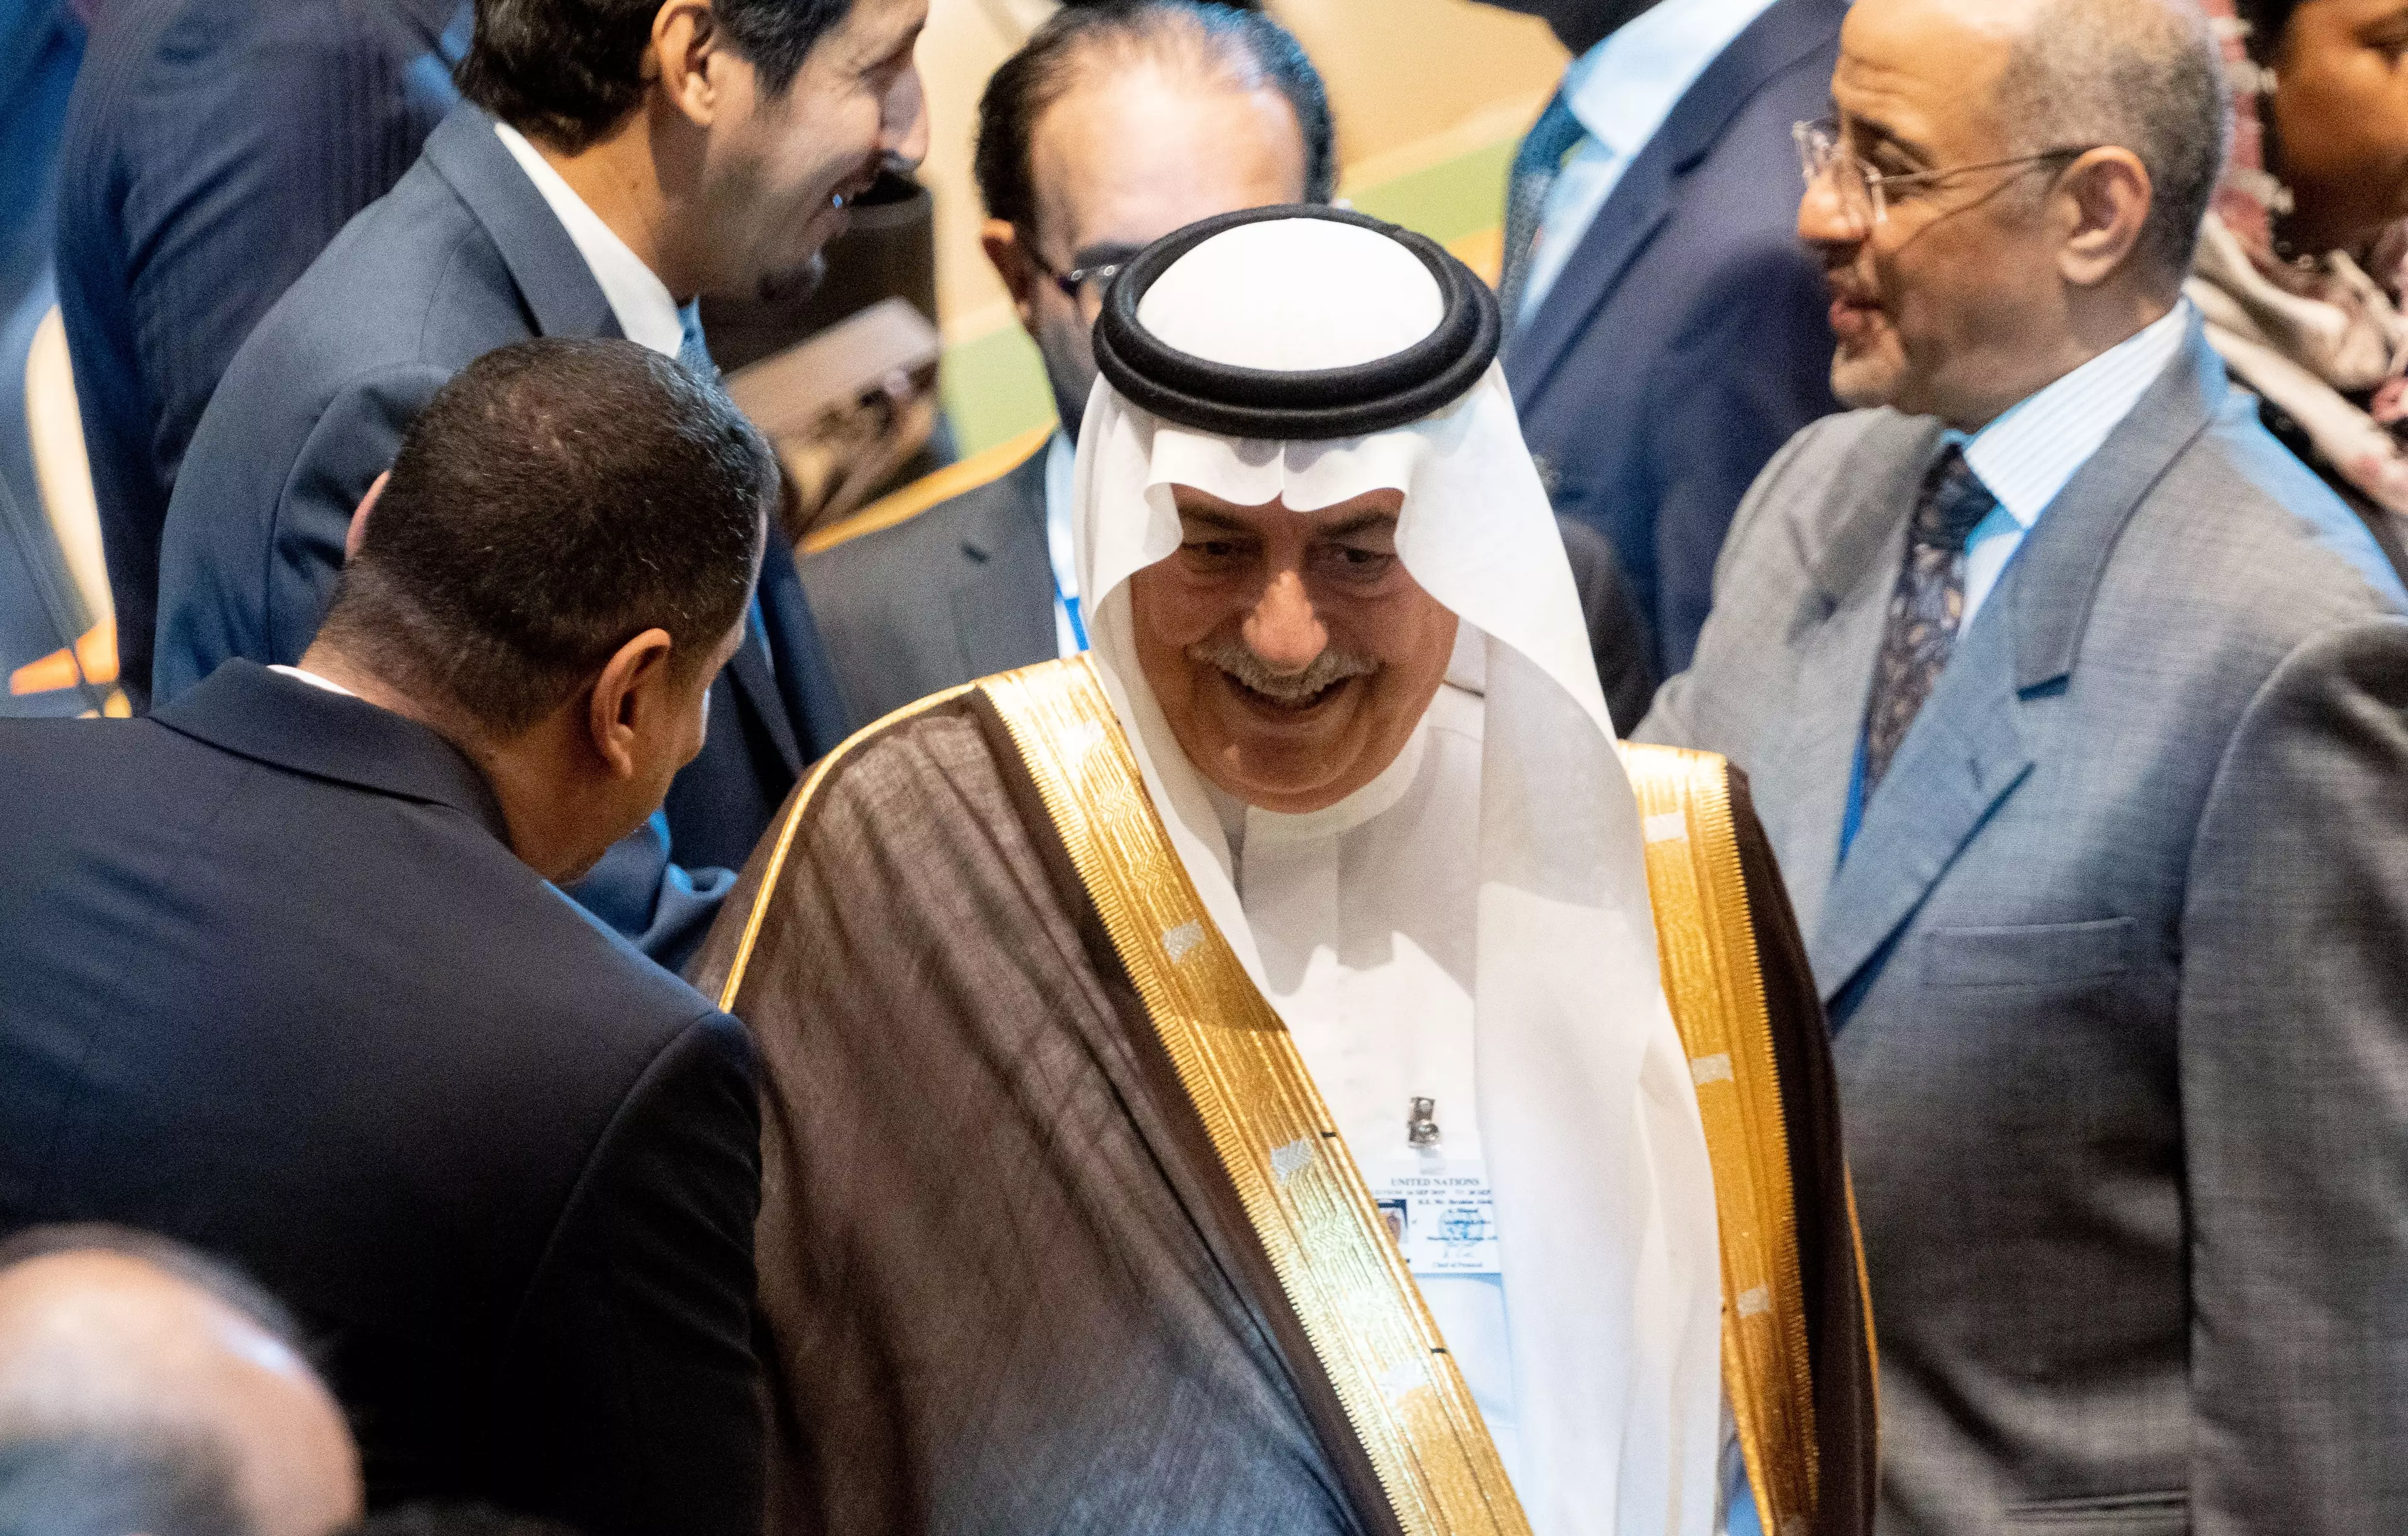 Saudi Arabia Foreign Minister Ibrahim Abdulaziz Al-Assaf at the UN Climate Summit.